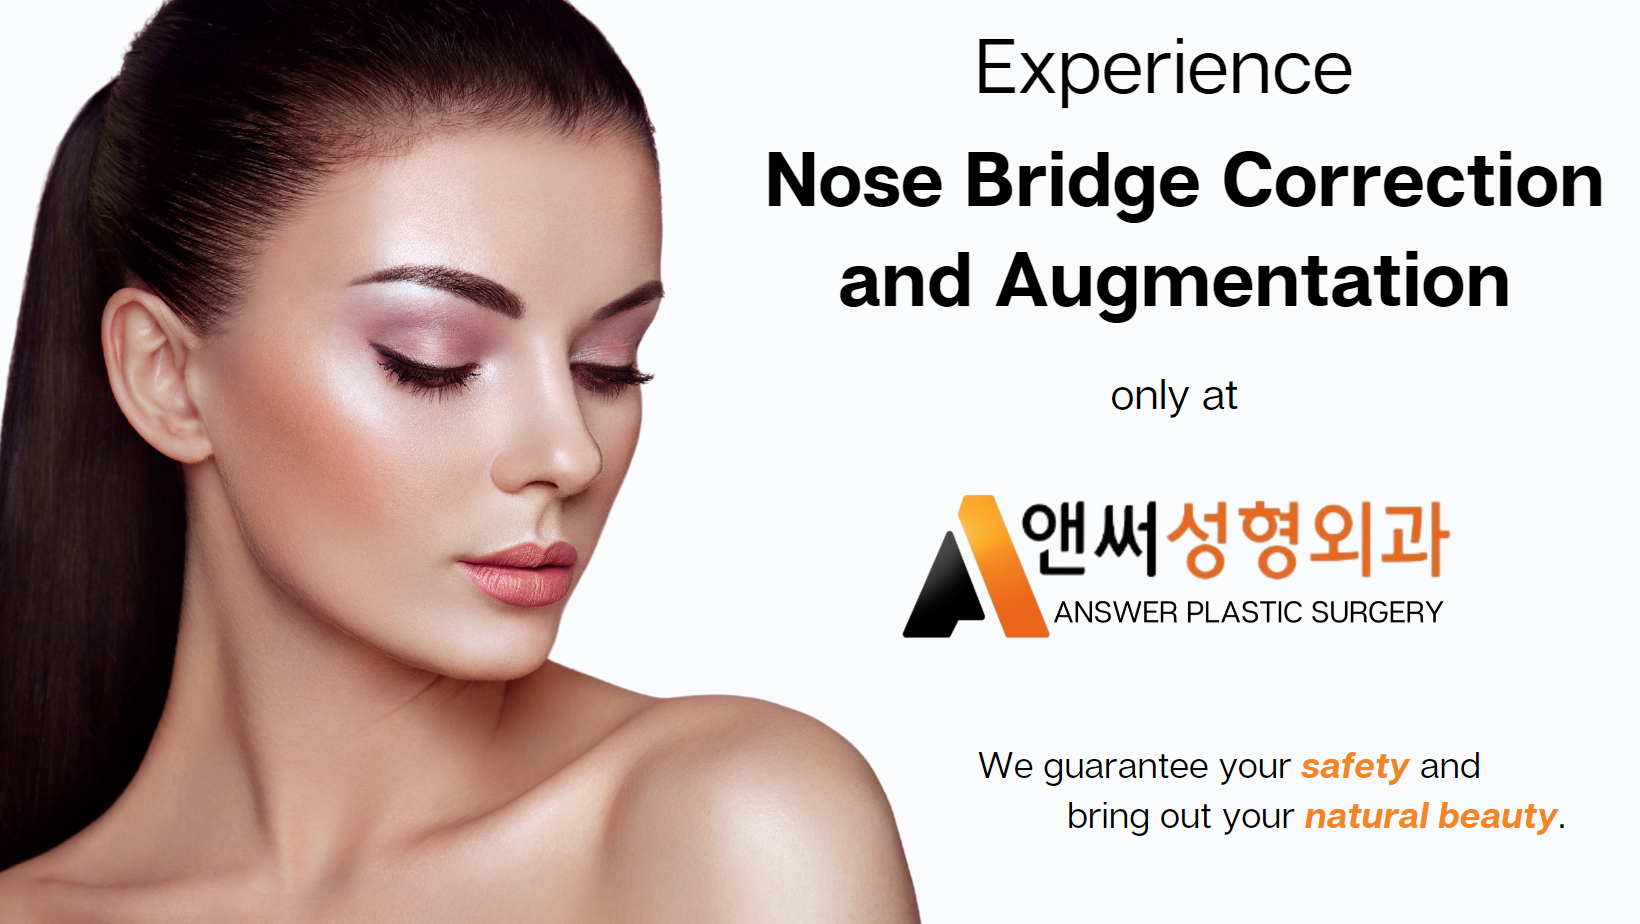 Nose Bridge Correction and Augmentation